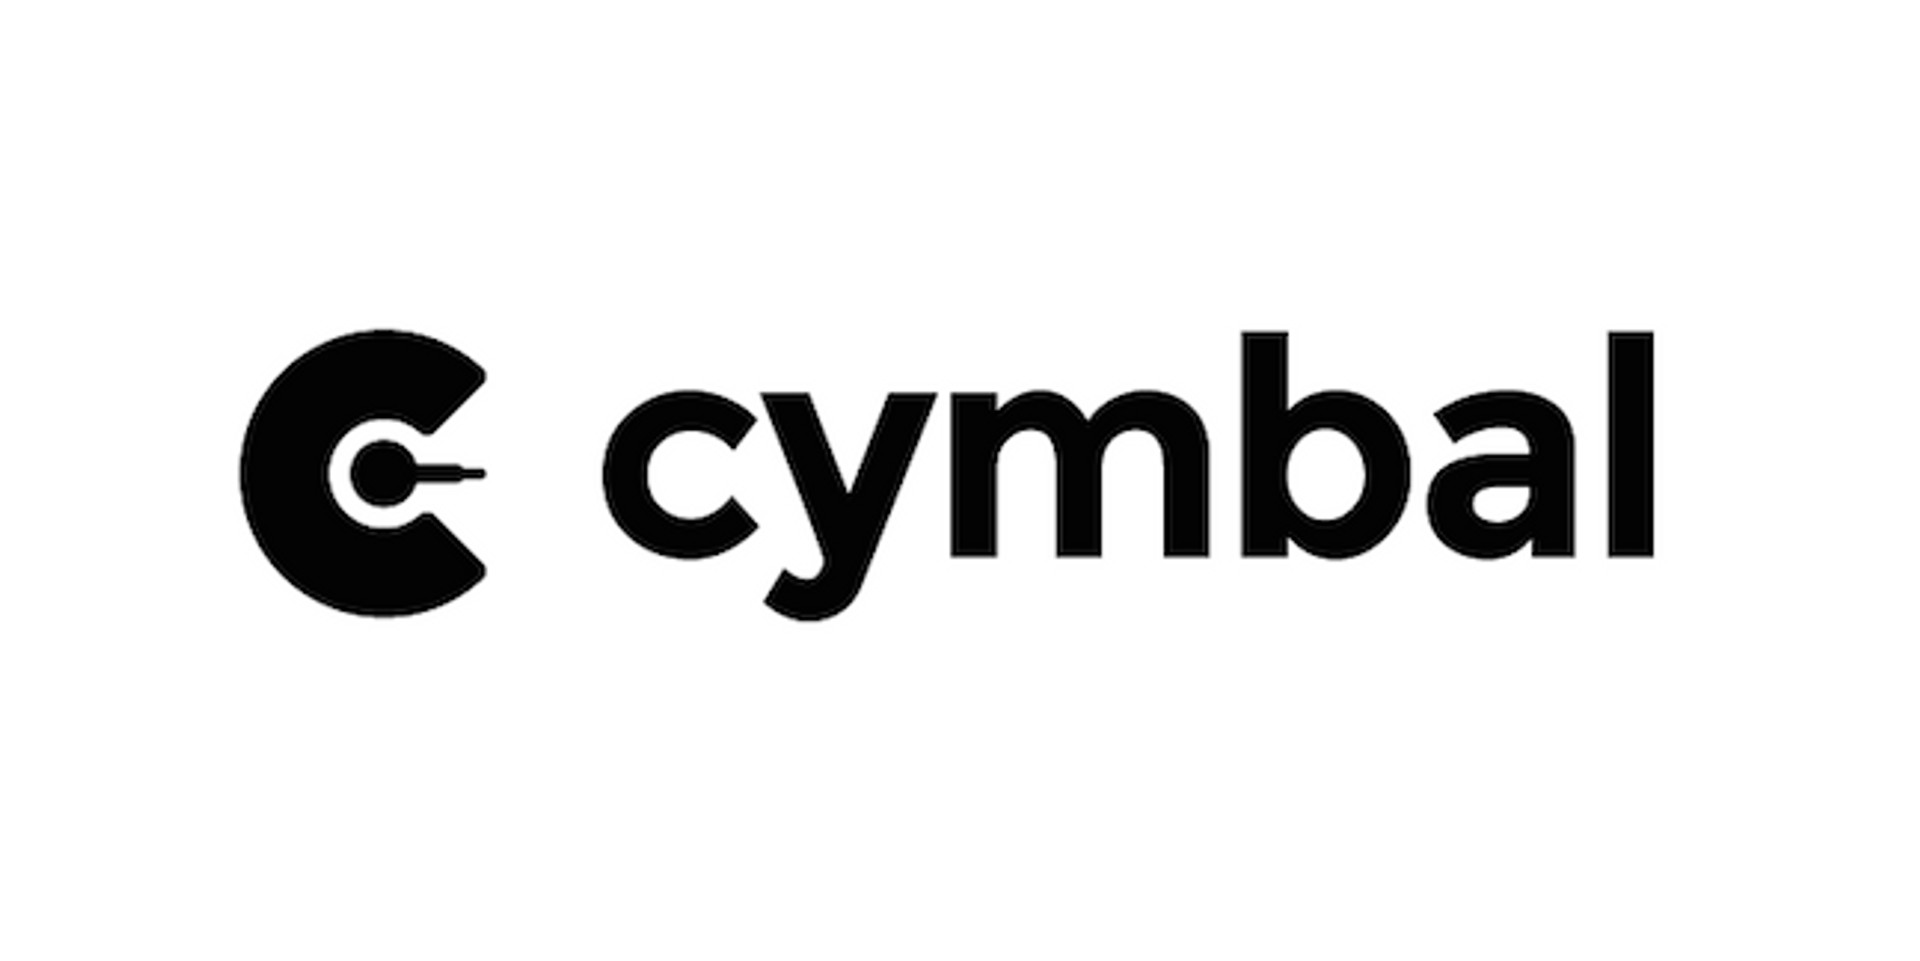 Social music platform Cymbal is shutting down